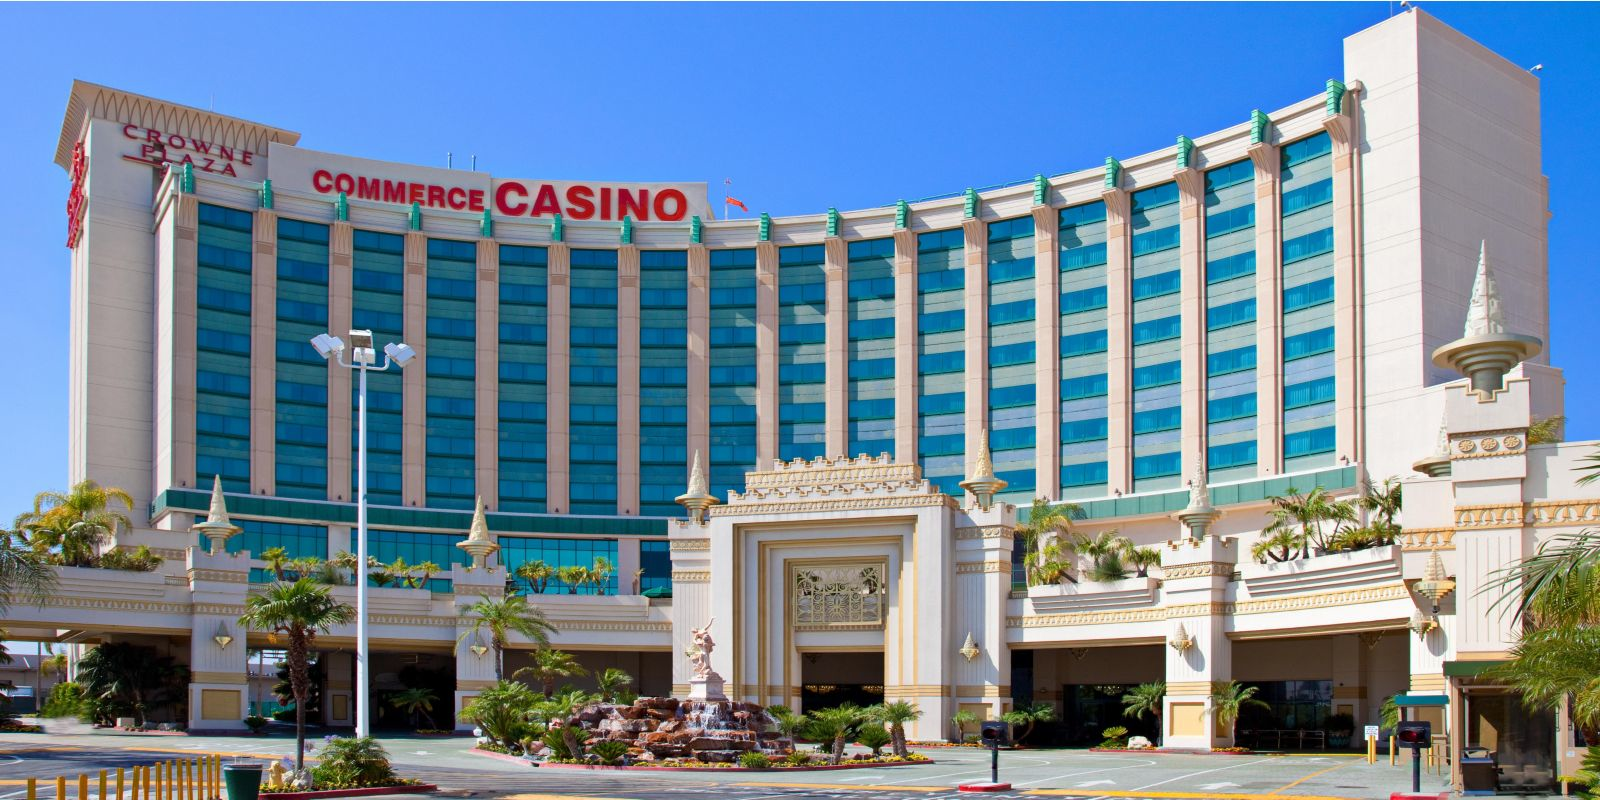 crowne plaza hotel commerce casino